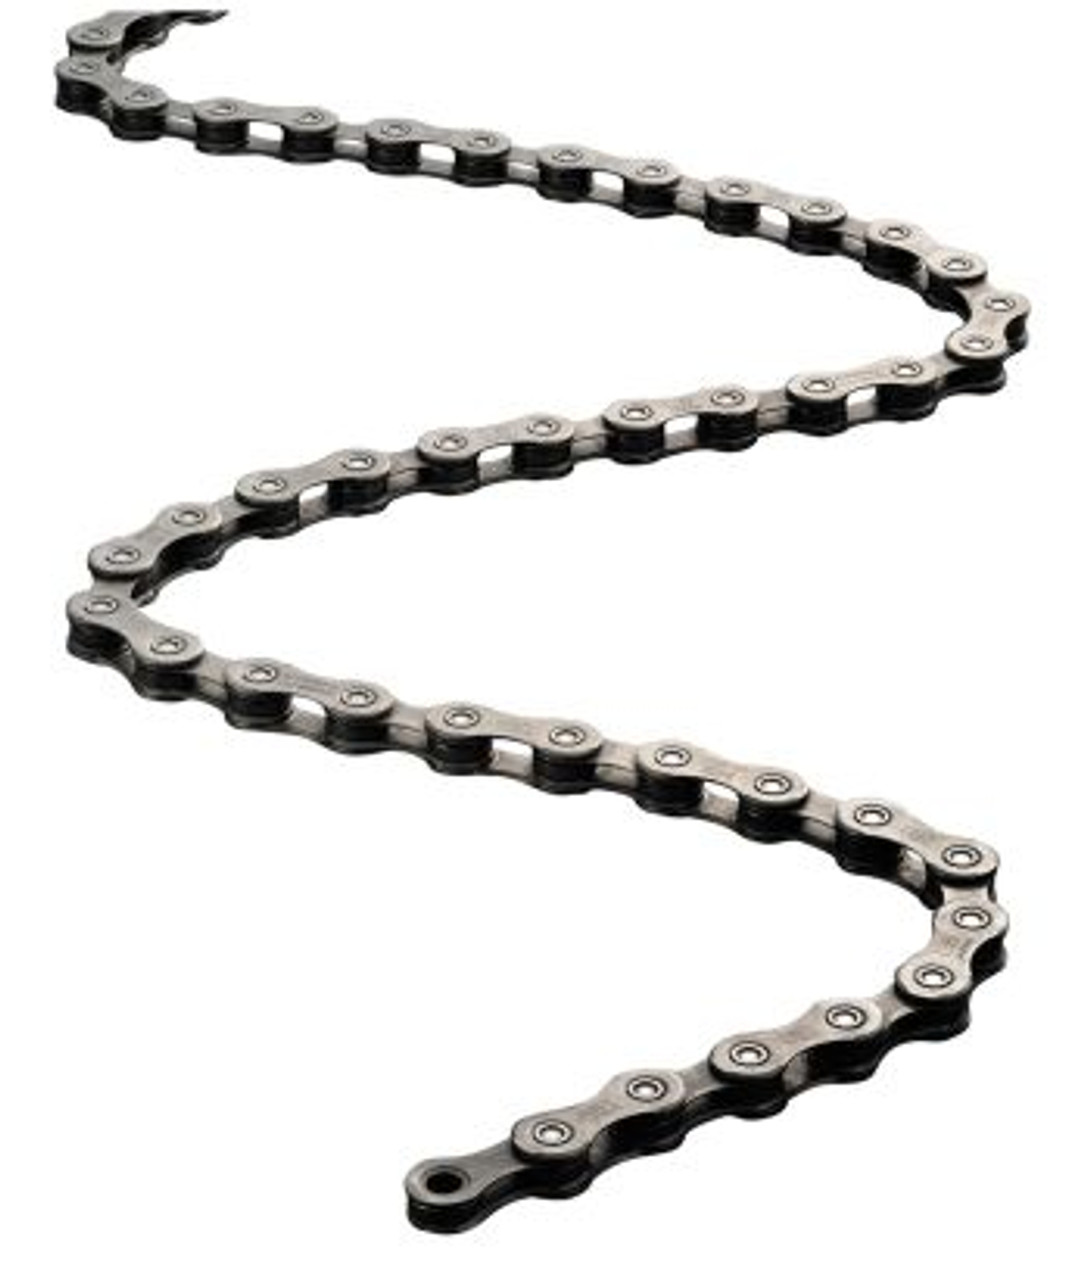 shimano chain link